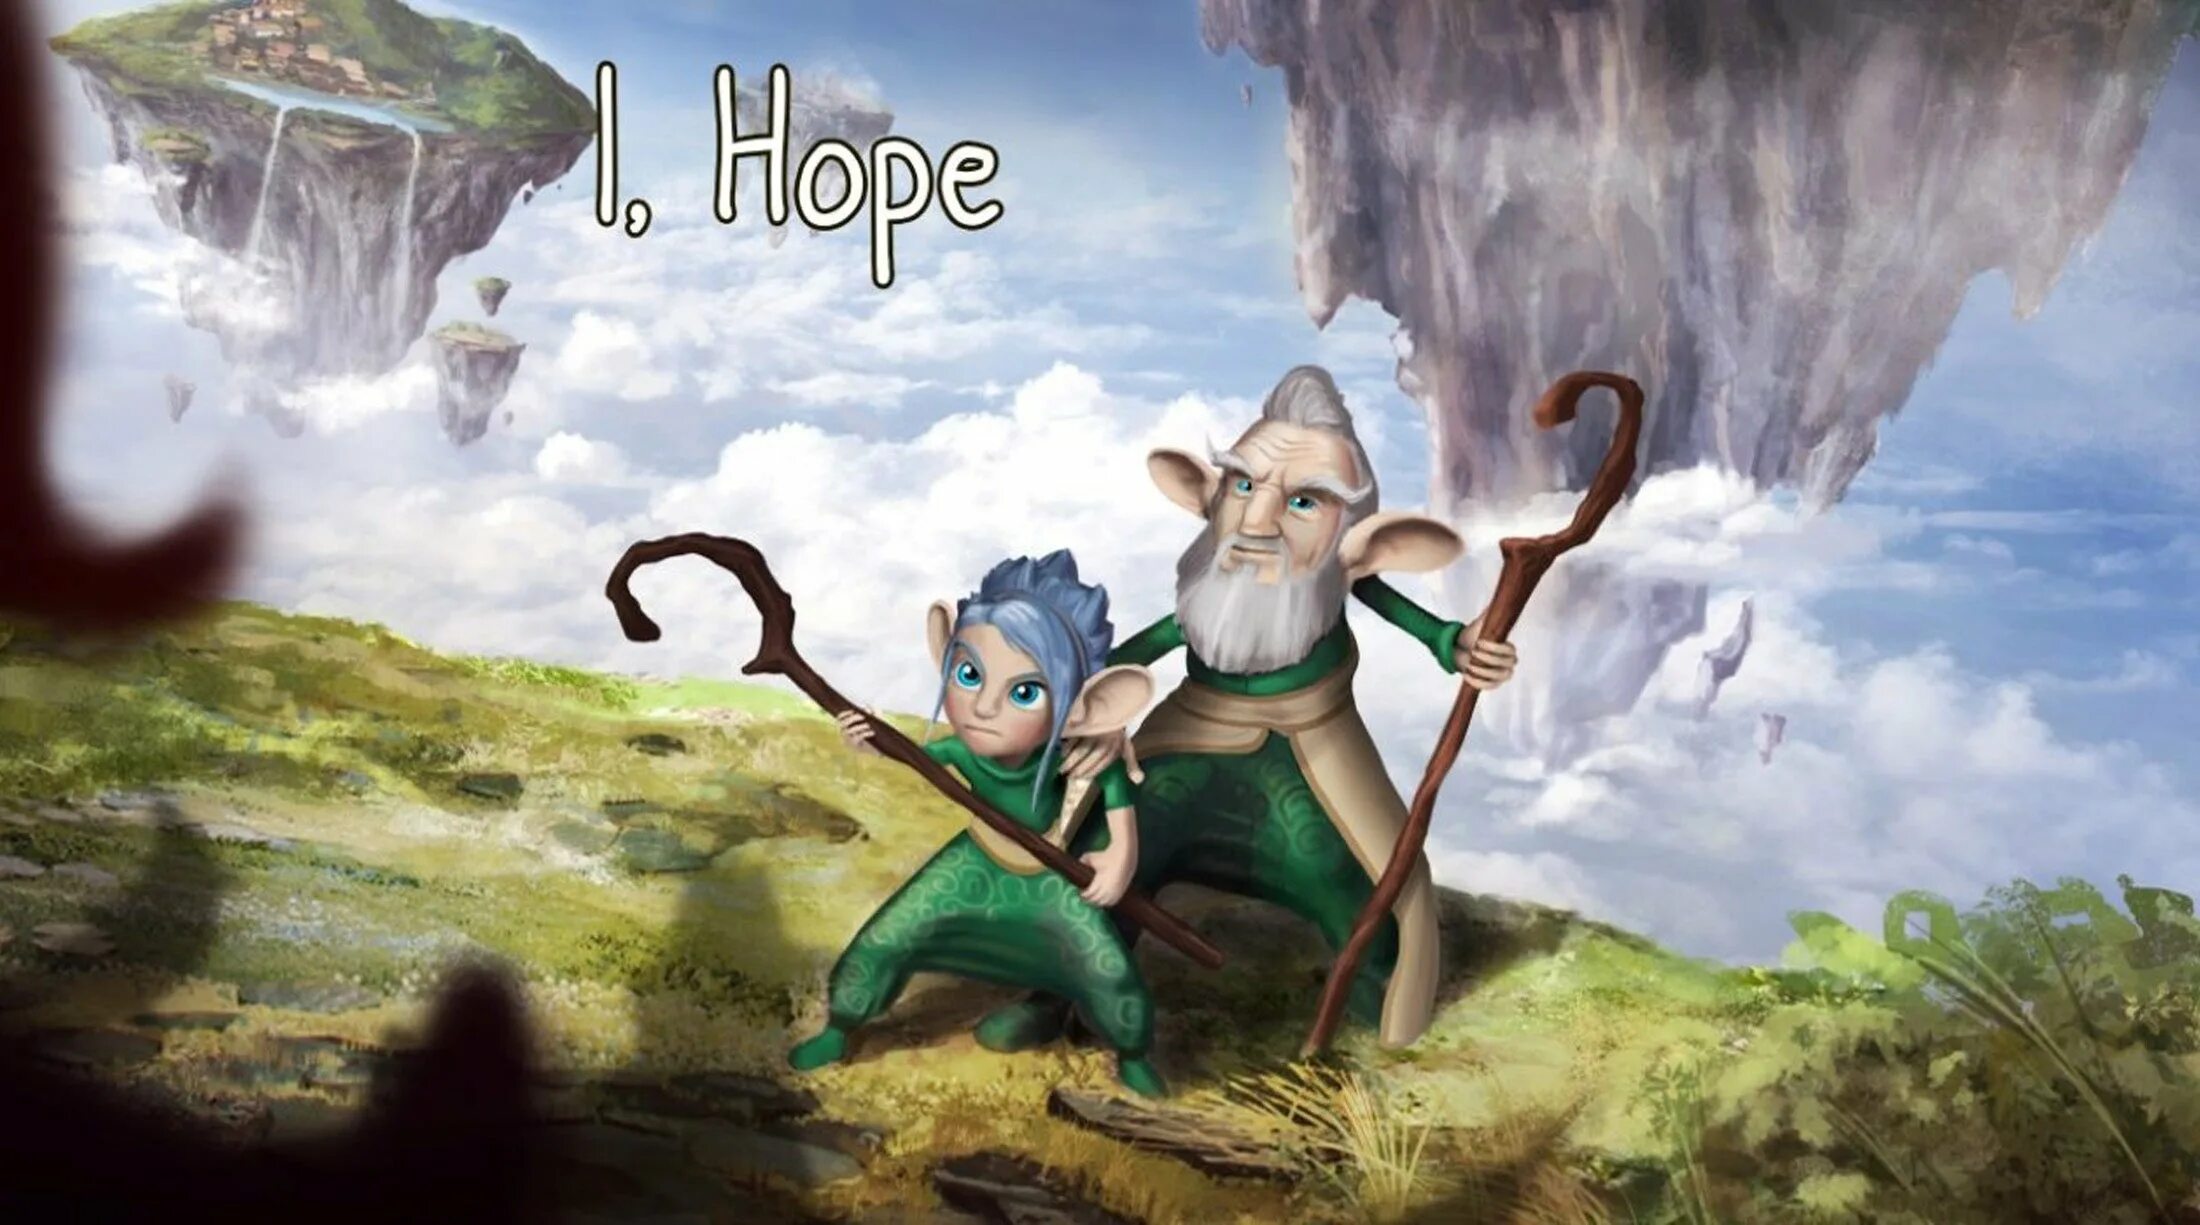 I hope he will. Union of hope игра. This hope игра. I hope видеоигра. Rava hope игра.